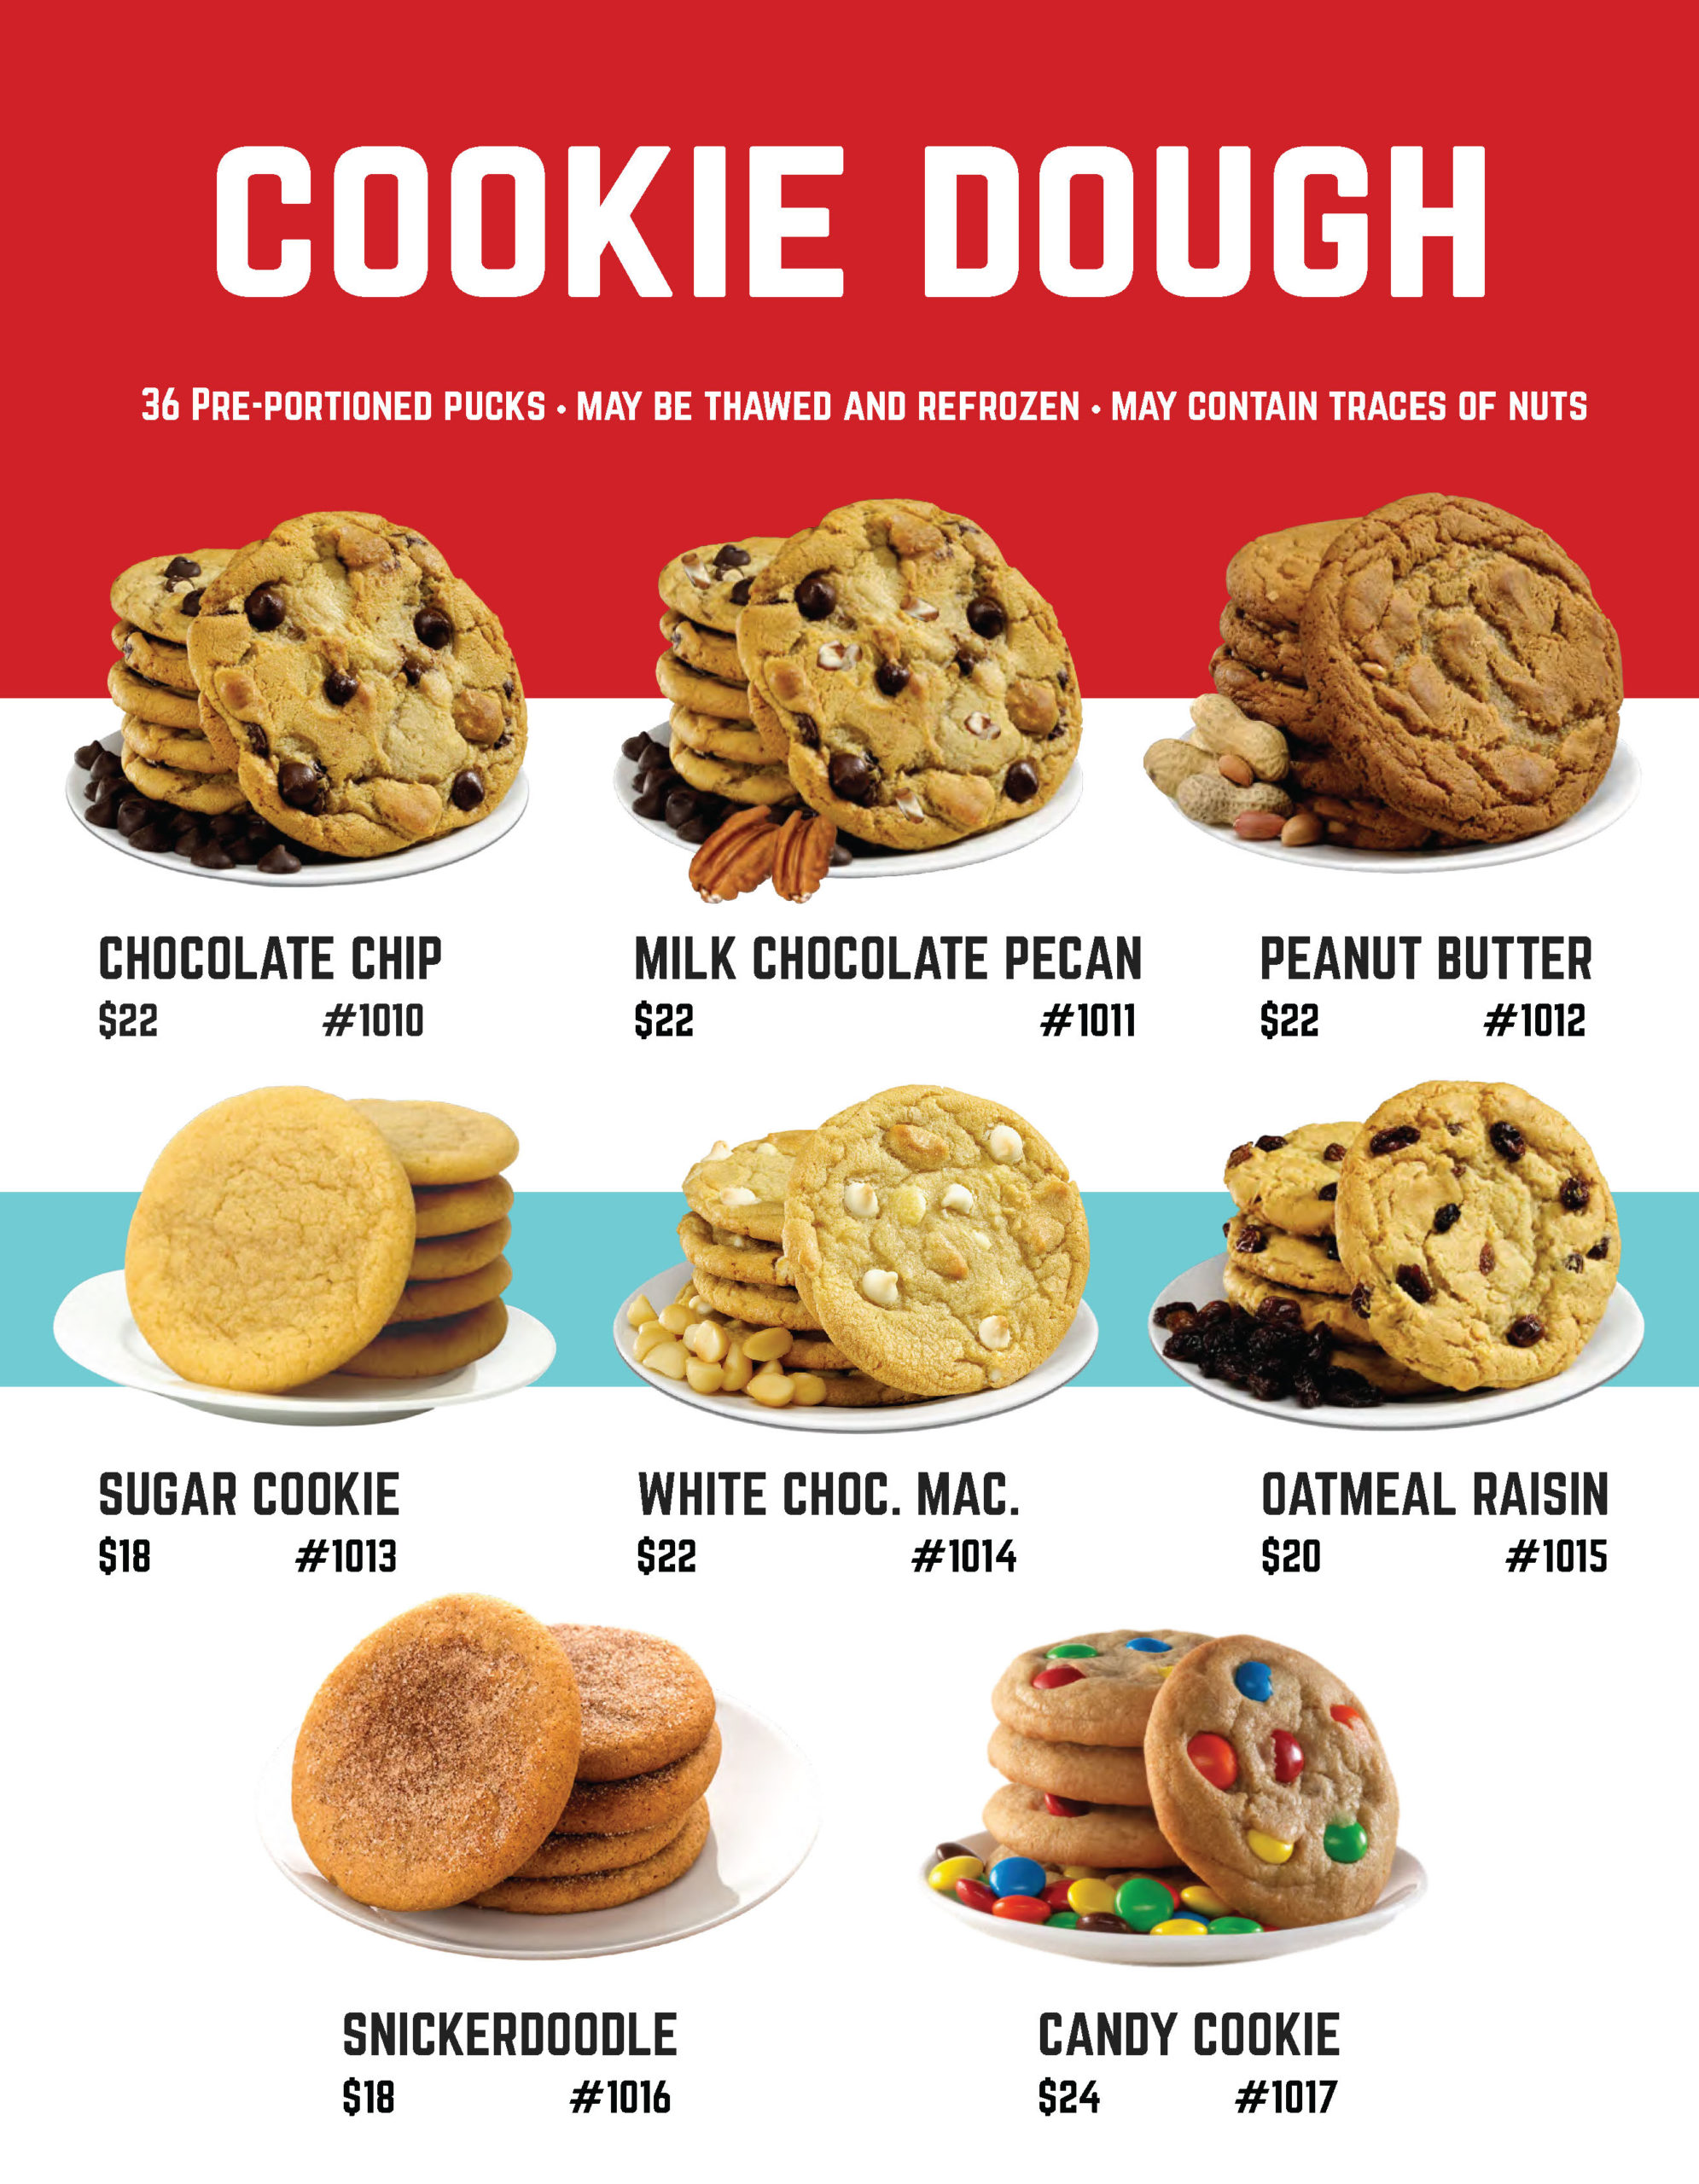 Cookie Dough Fundraiser